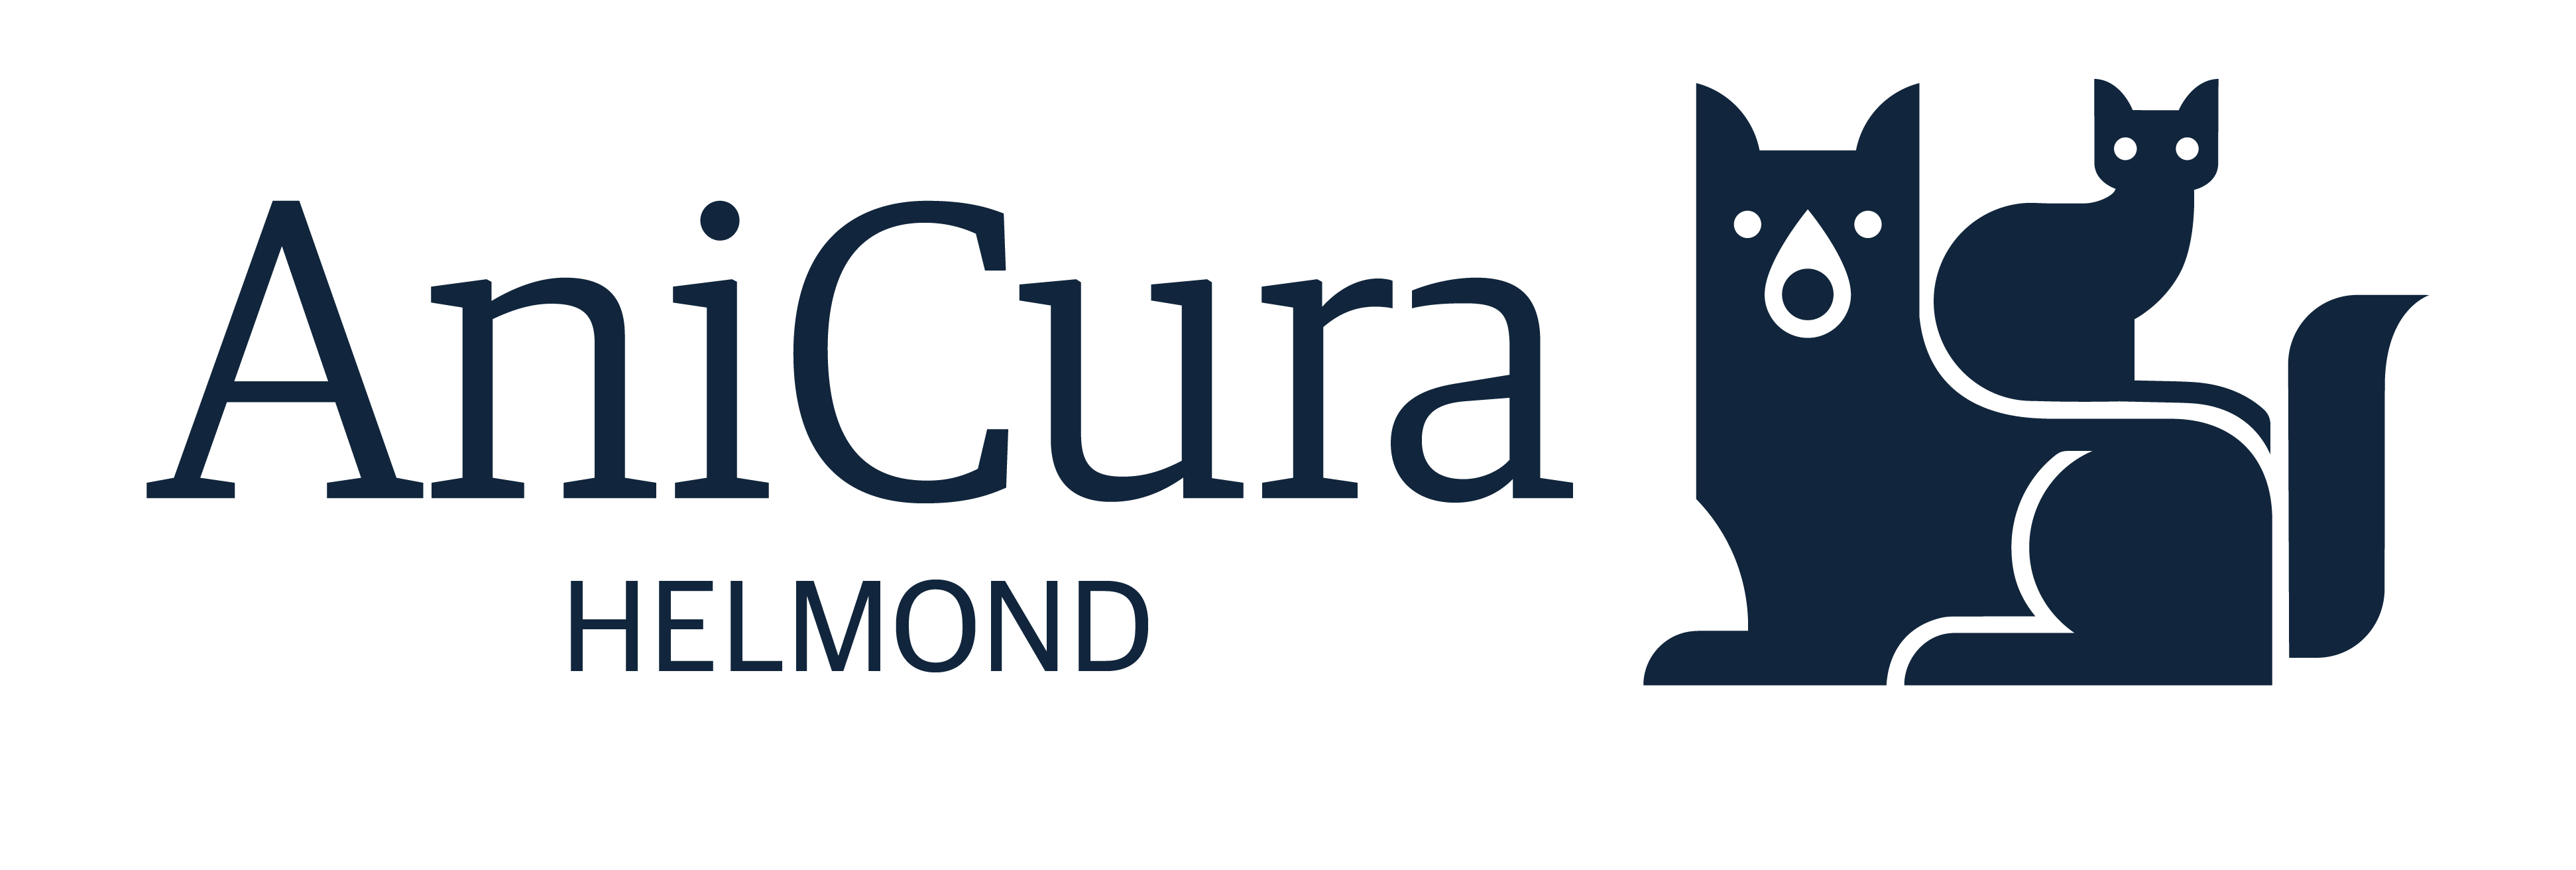 AniCura Helmond - Stiphout logo